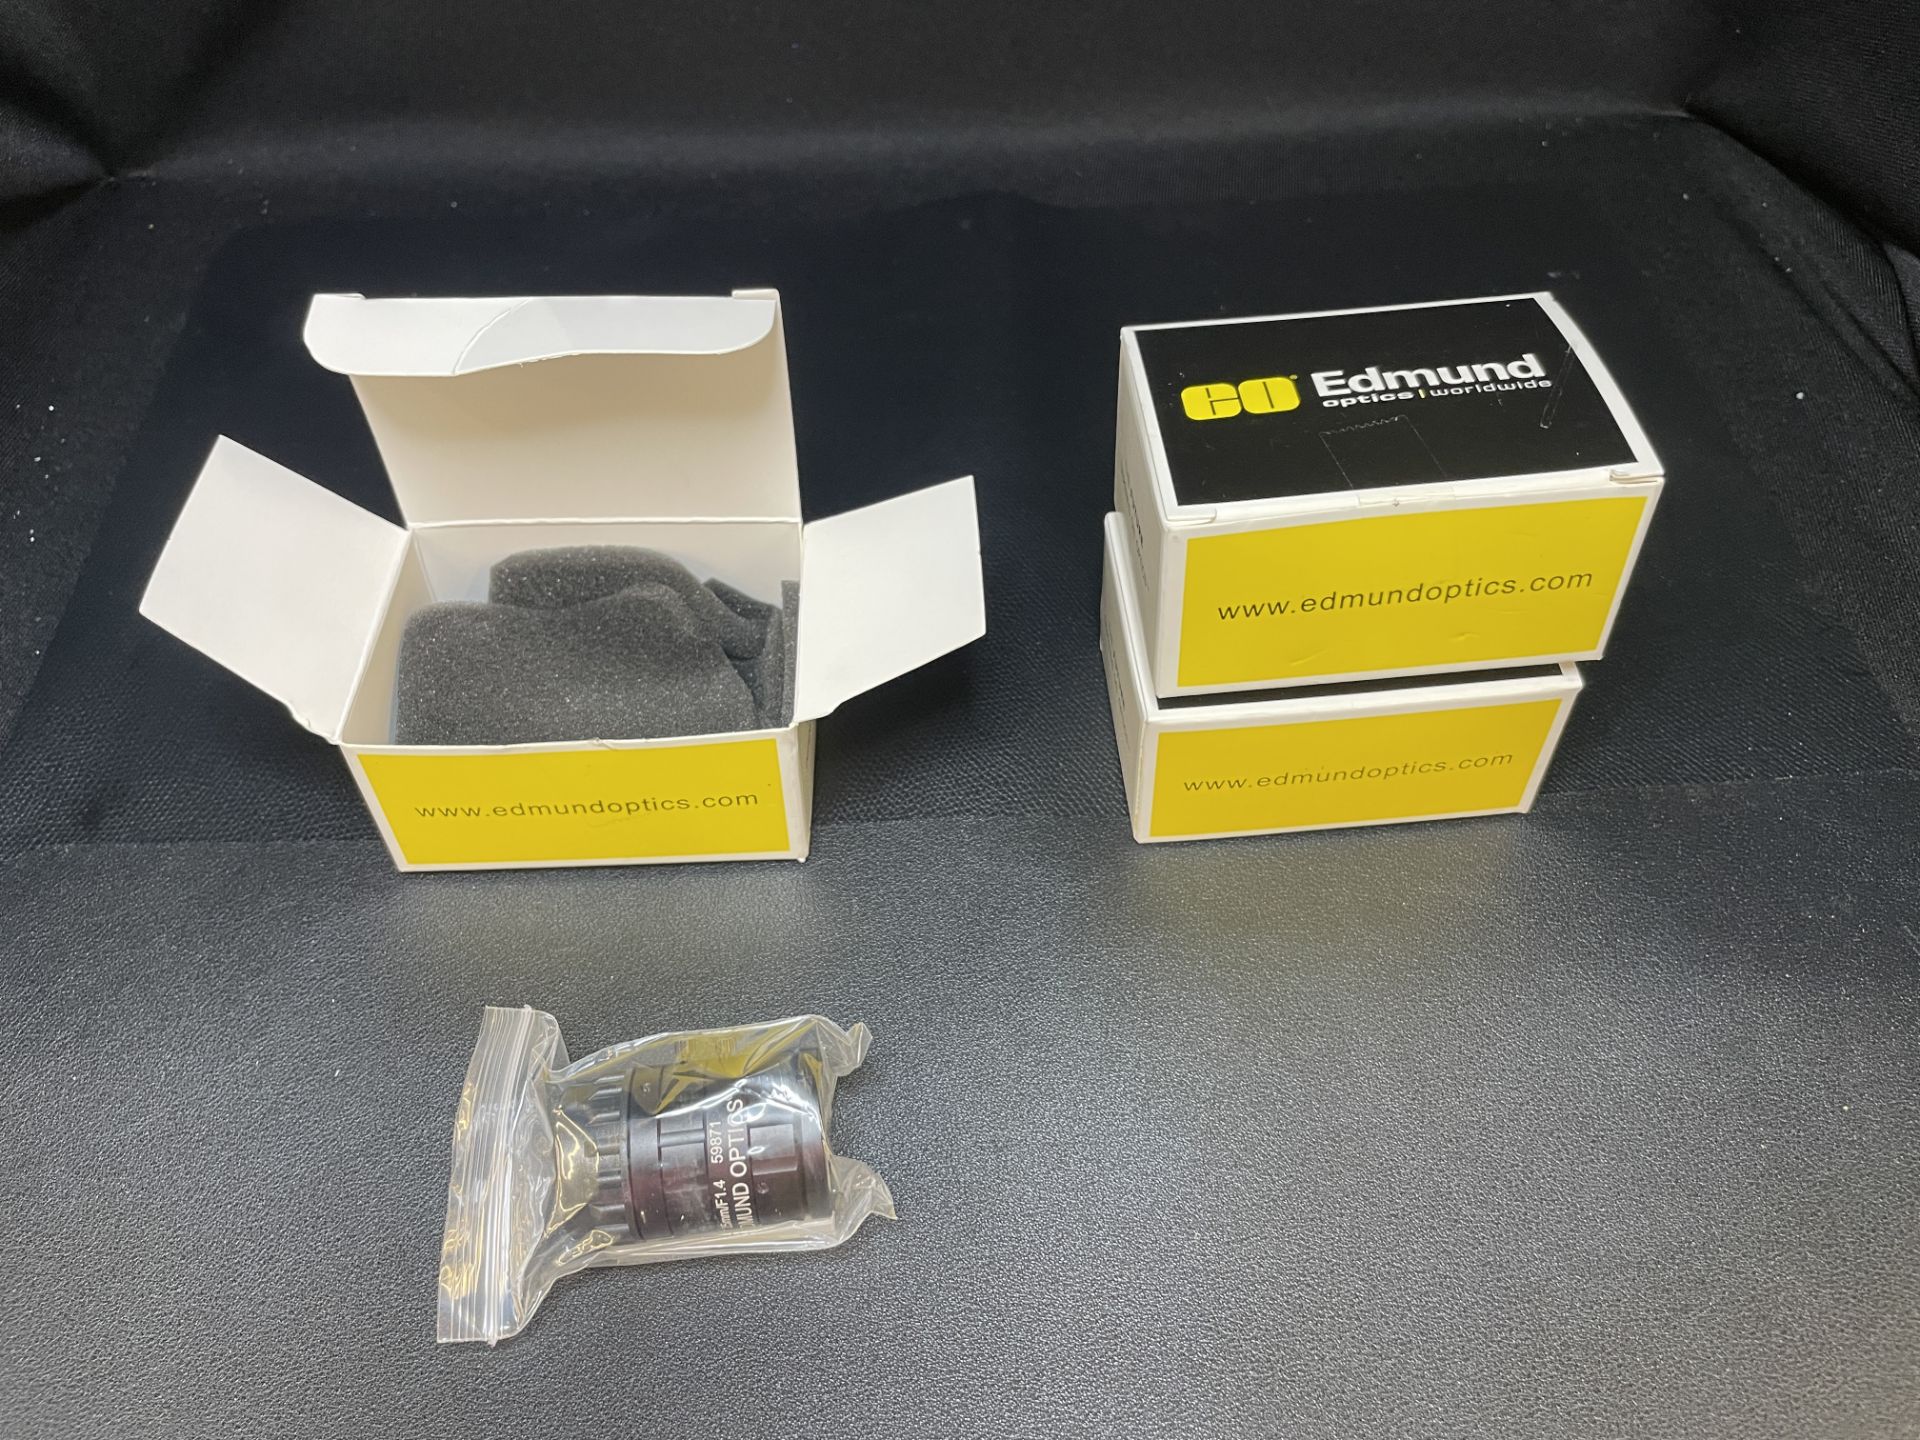 (3) New In Box Edmund 25mm C Series Lens